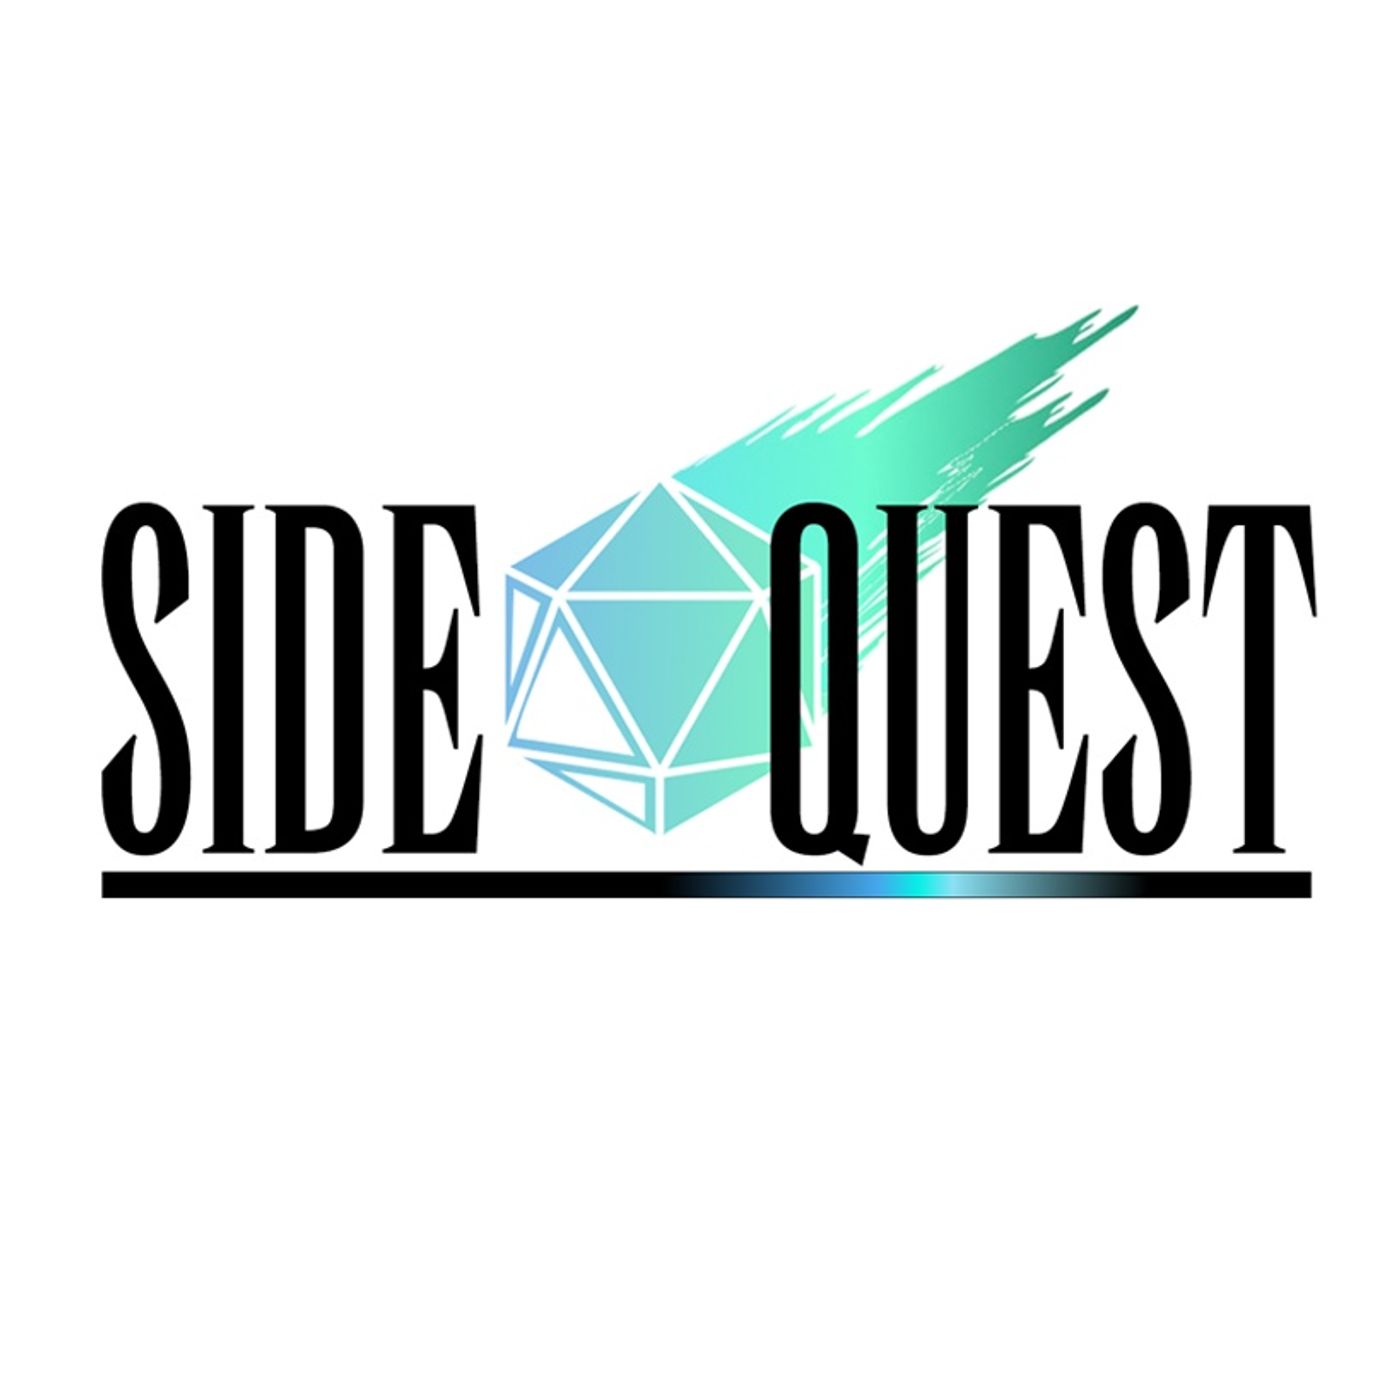 Side Quest 125: The Return of Steve Rudzinski